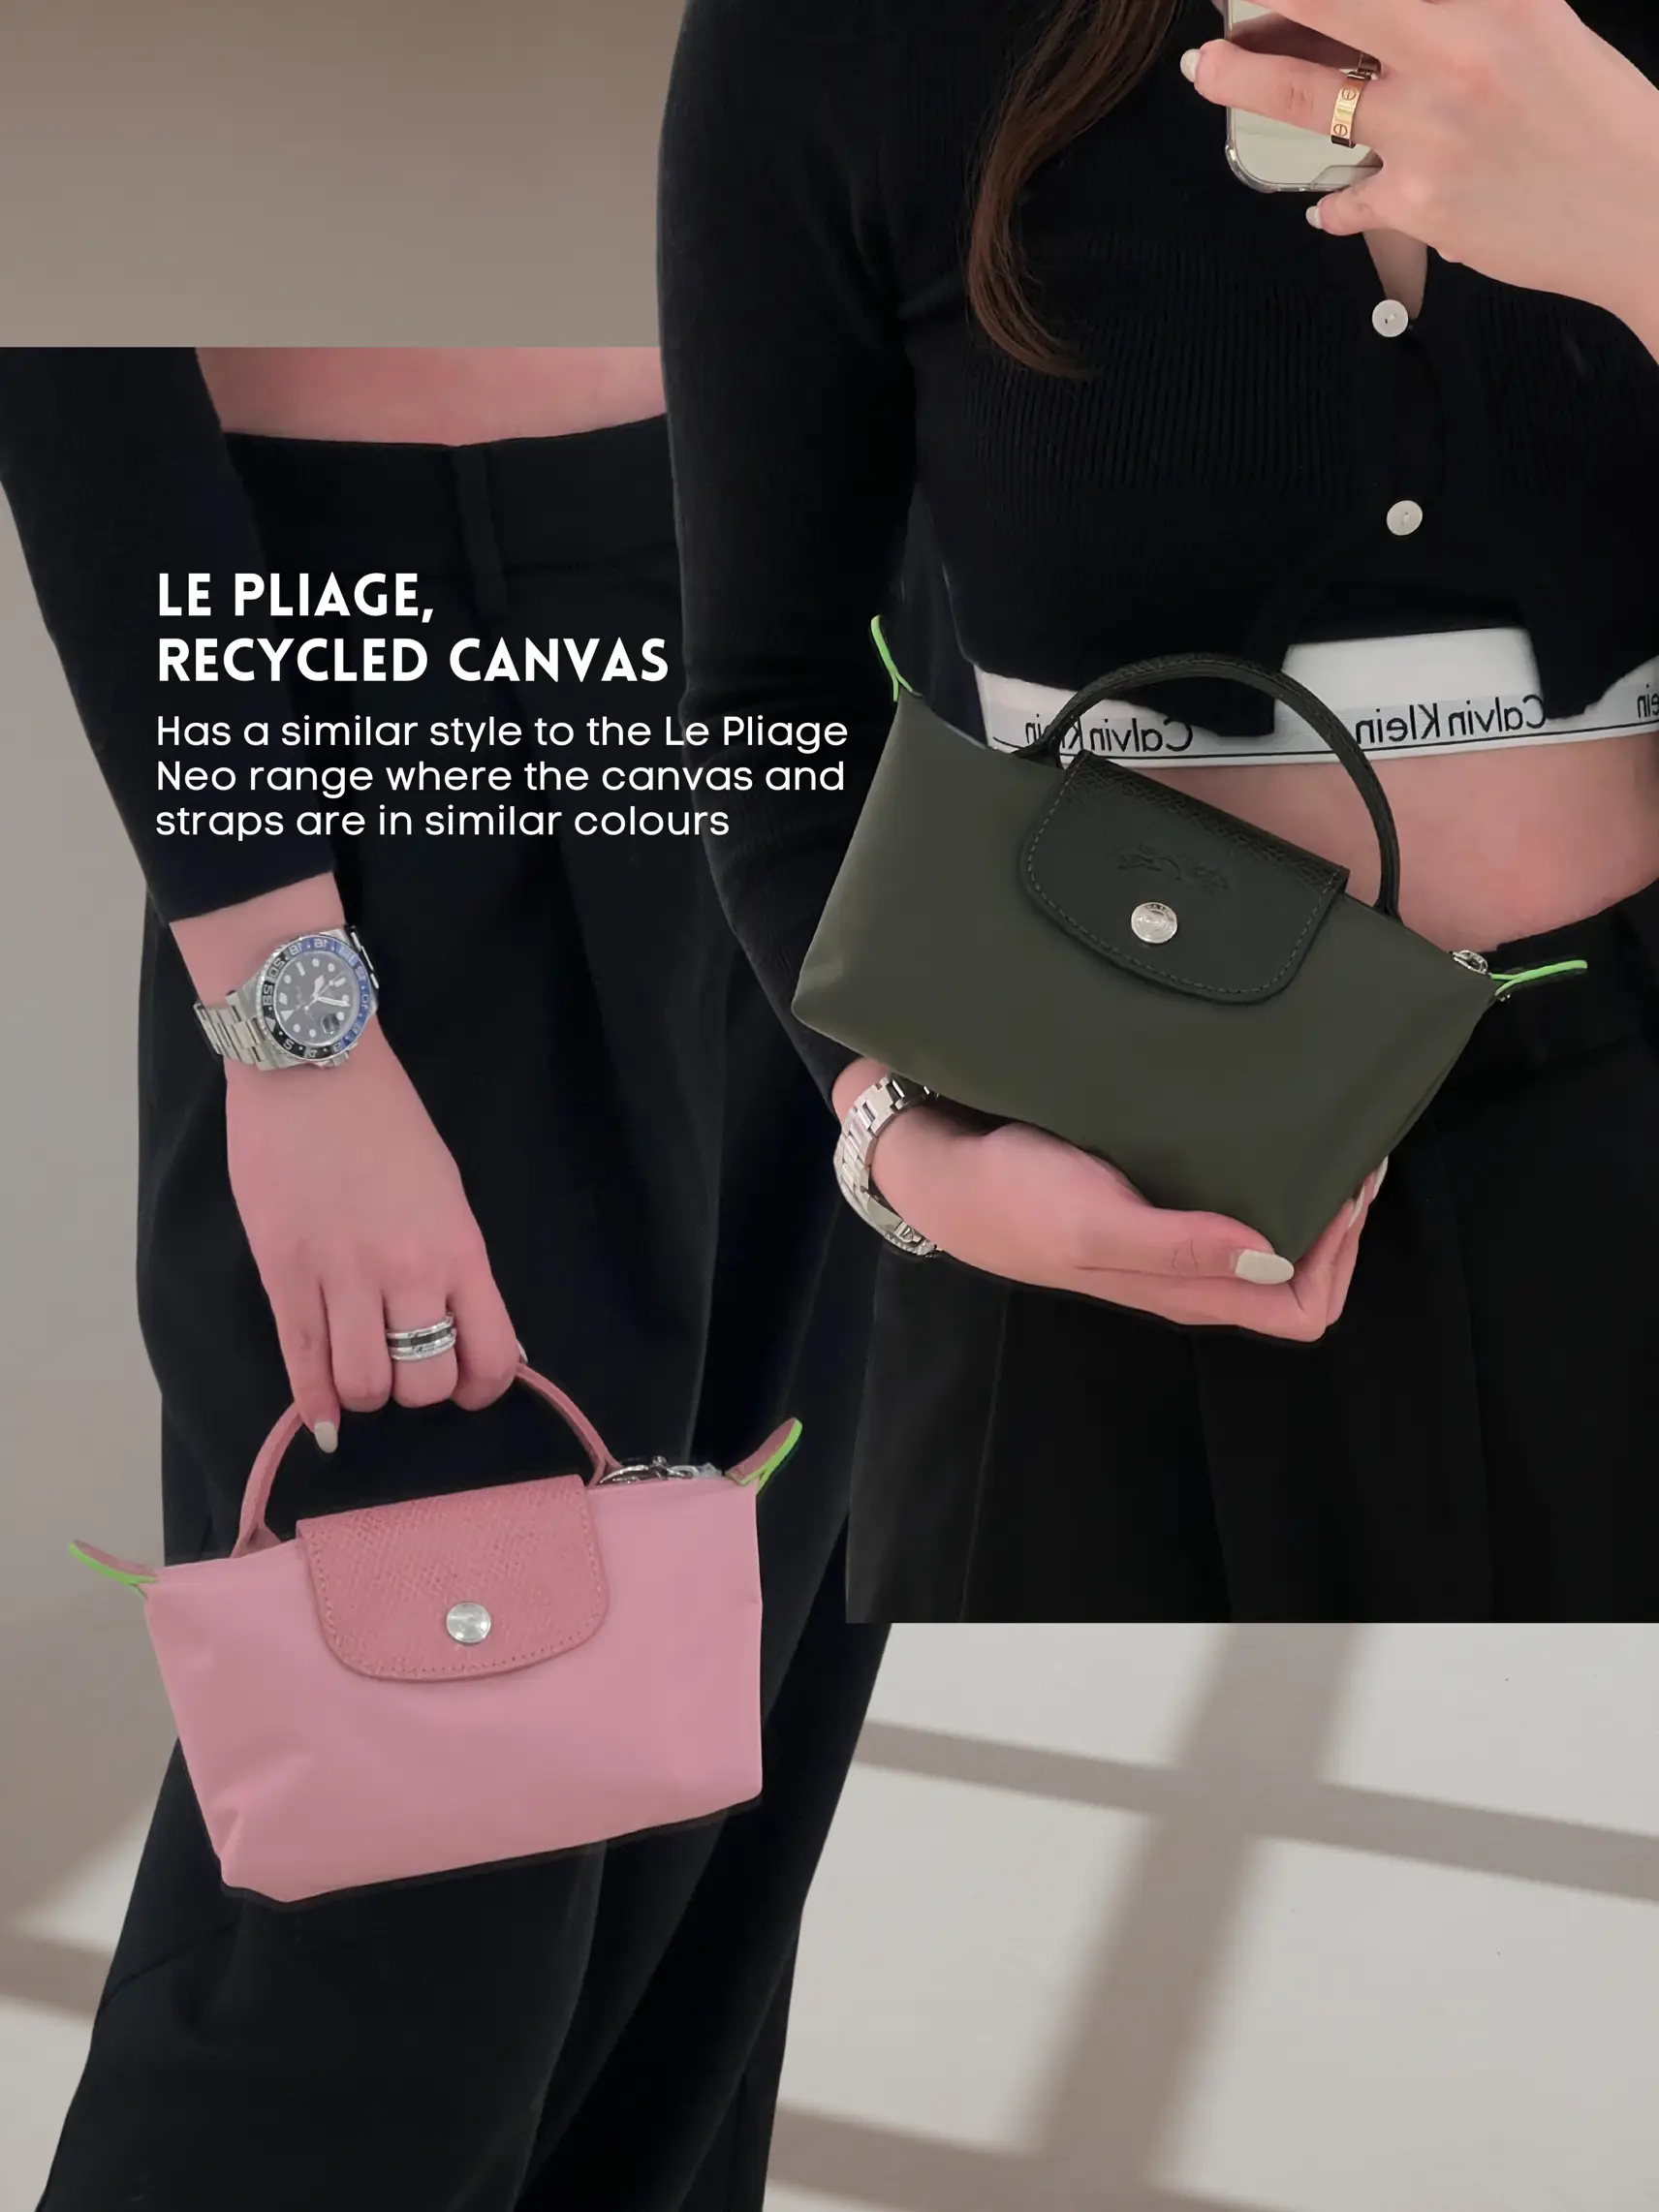 Longchamp Mini sling bag